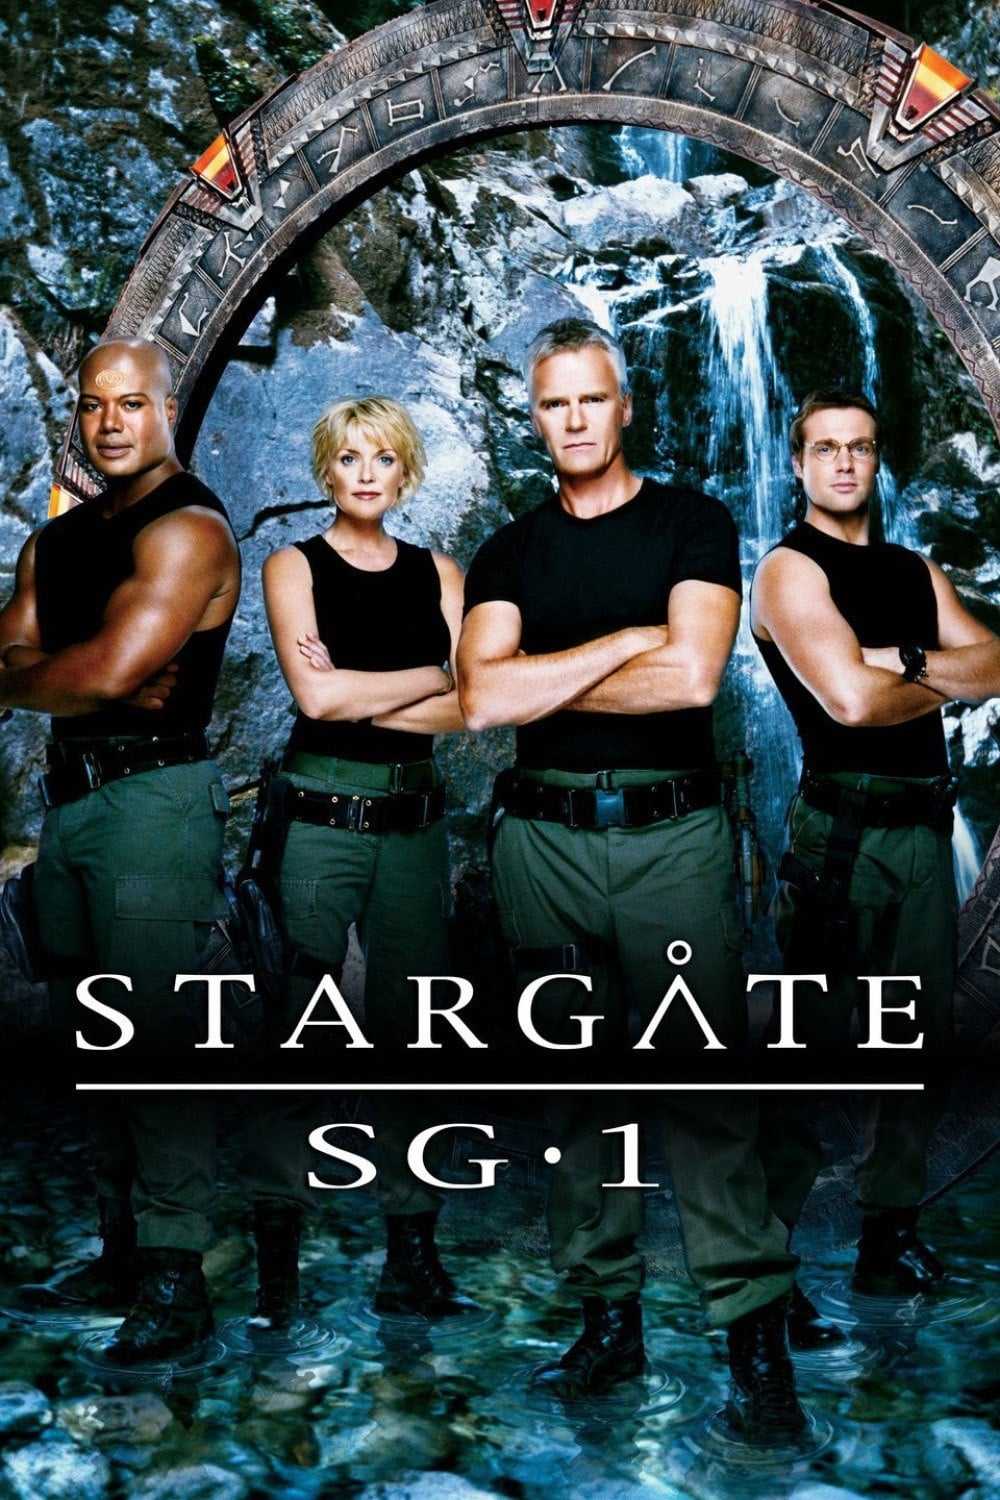 Stargate SG-1 in streaming